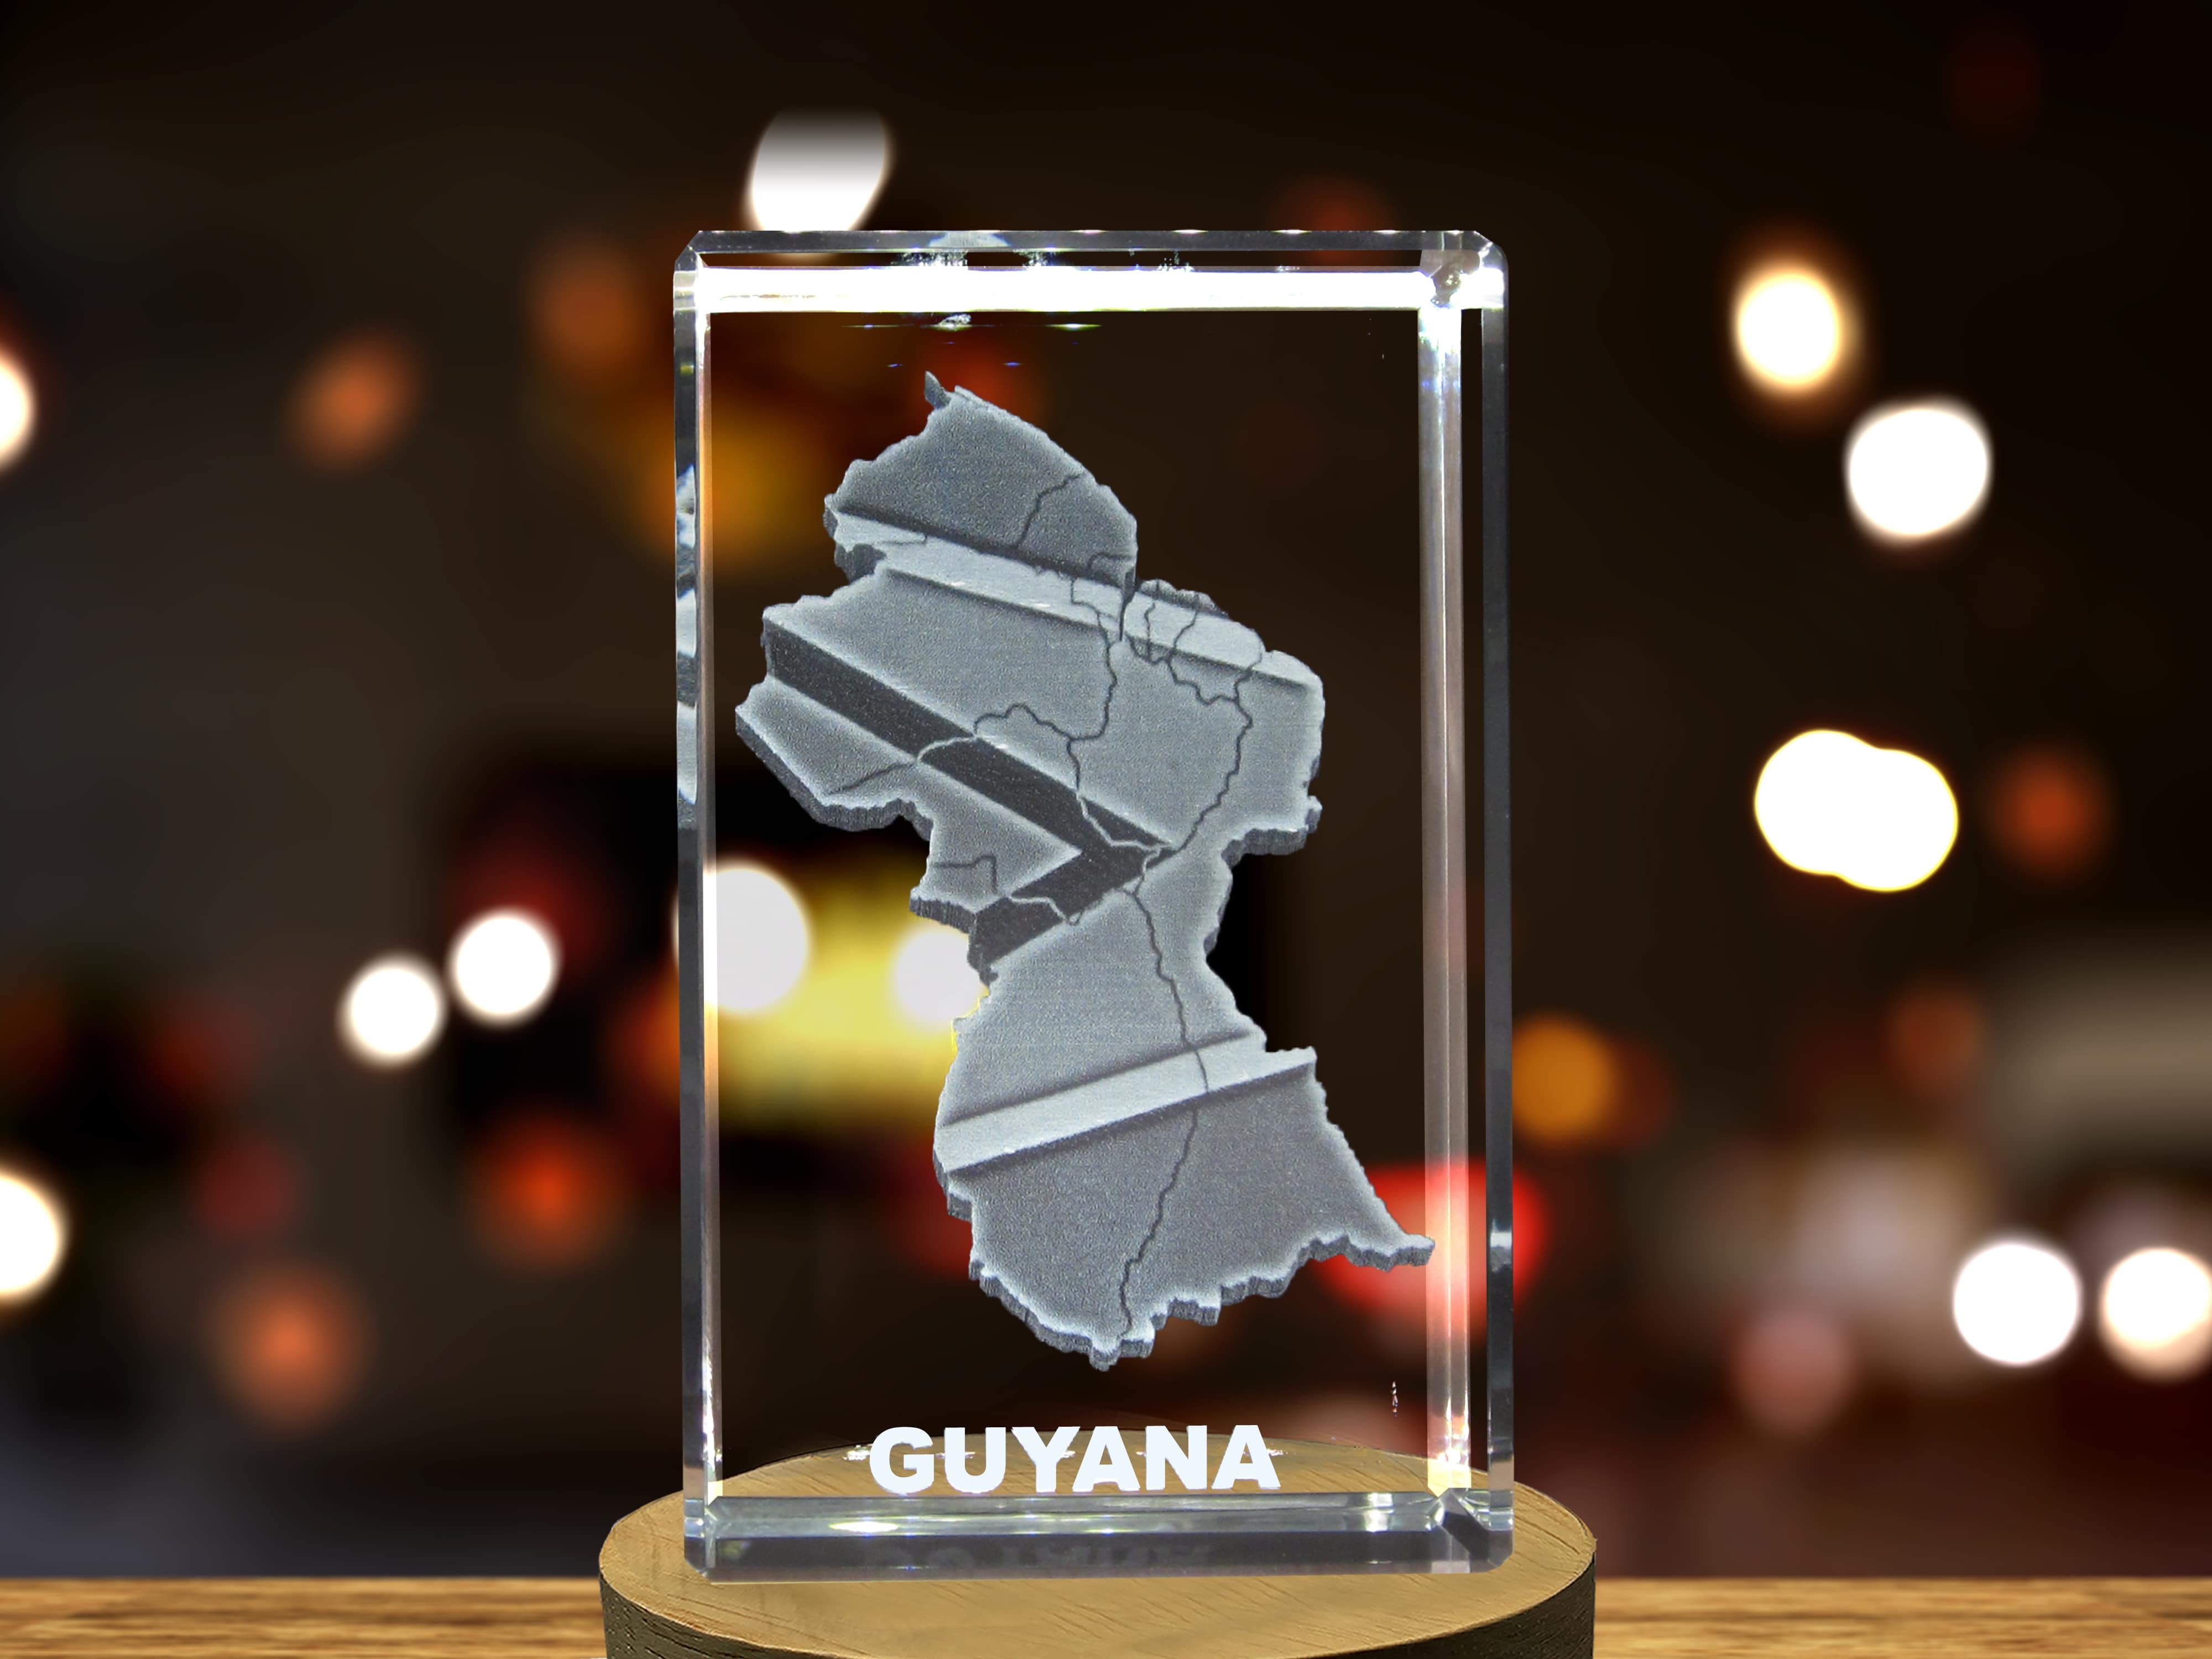 Guyana 3D Engraved Crystal 3D Engraved Crystal Keepsake/Gift/Decor/Collectible/Souvenir A&B Crystal Collection